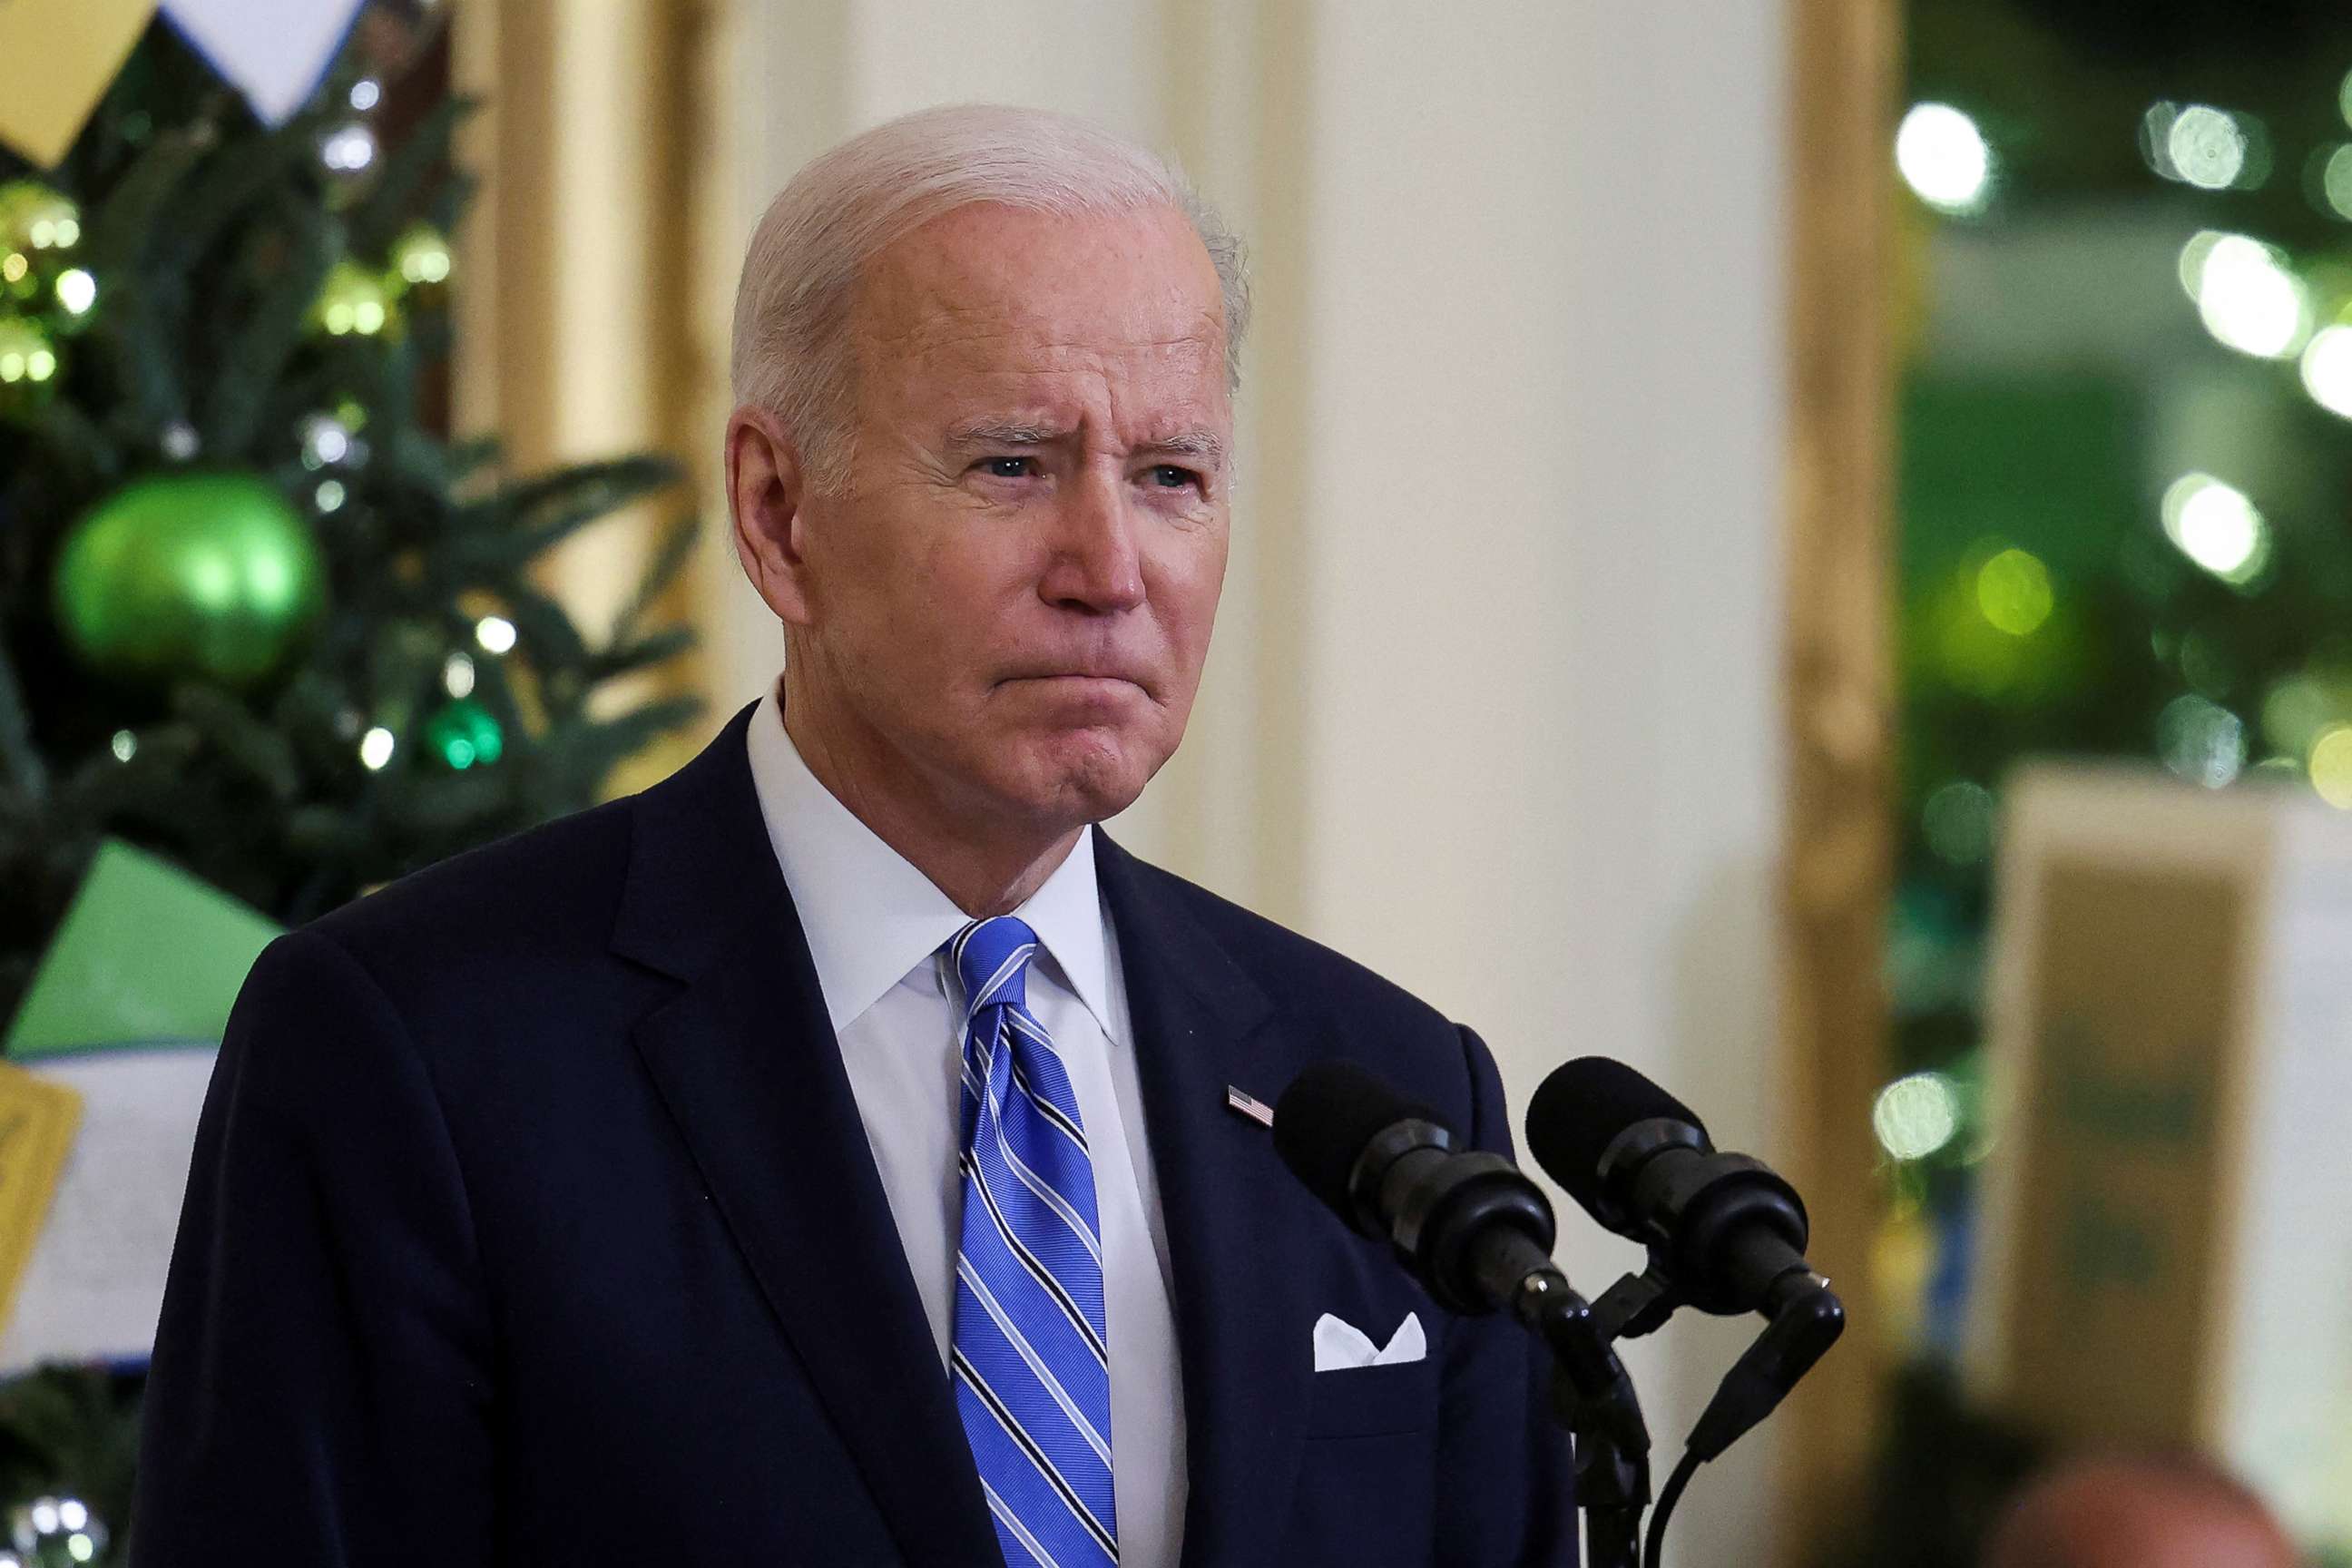 PHOTO: President Joe Biden pauses during a speech at the White House, Dec. 16, 2021.